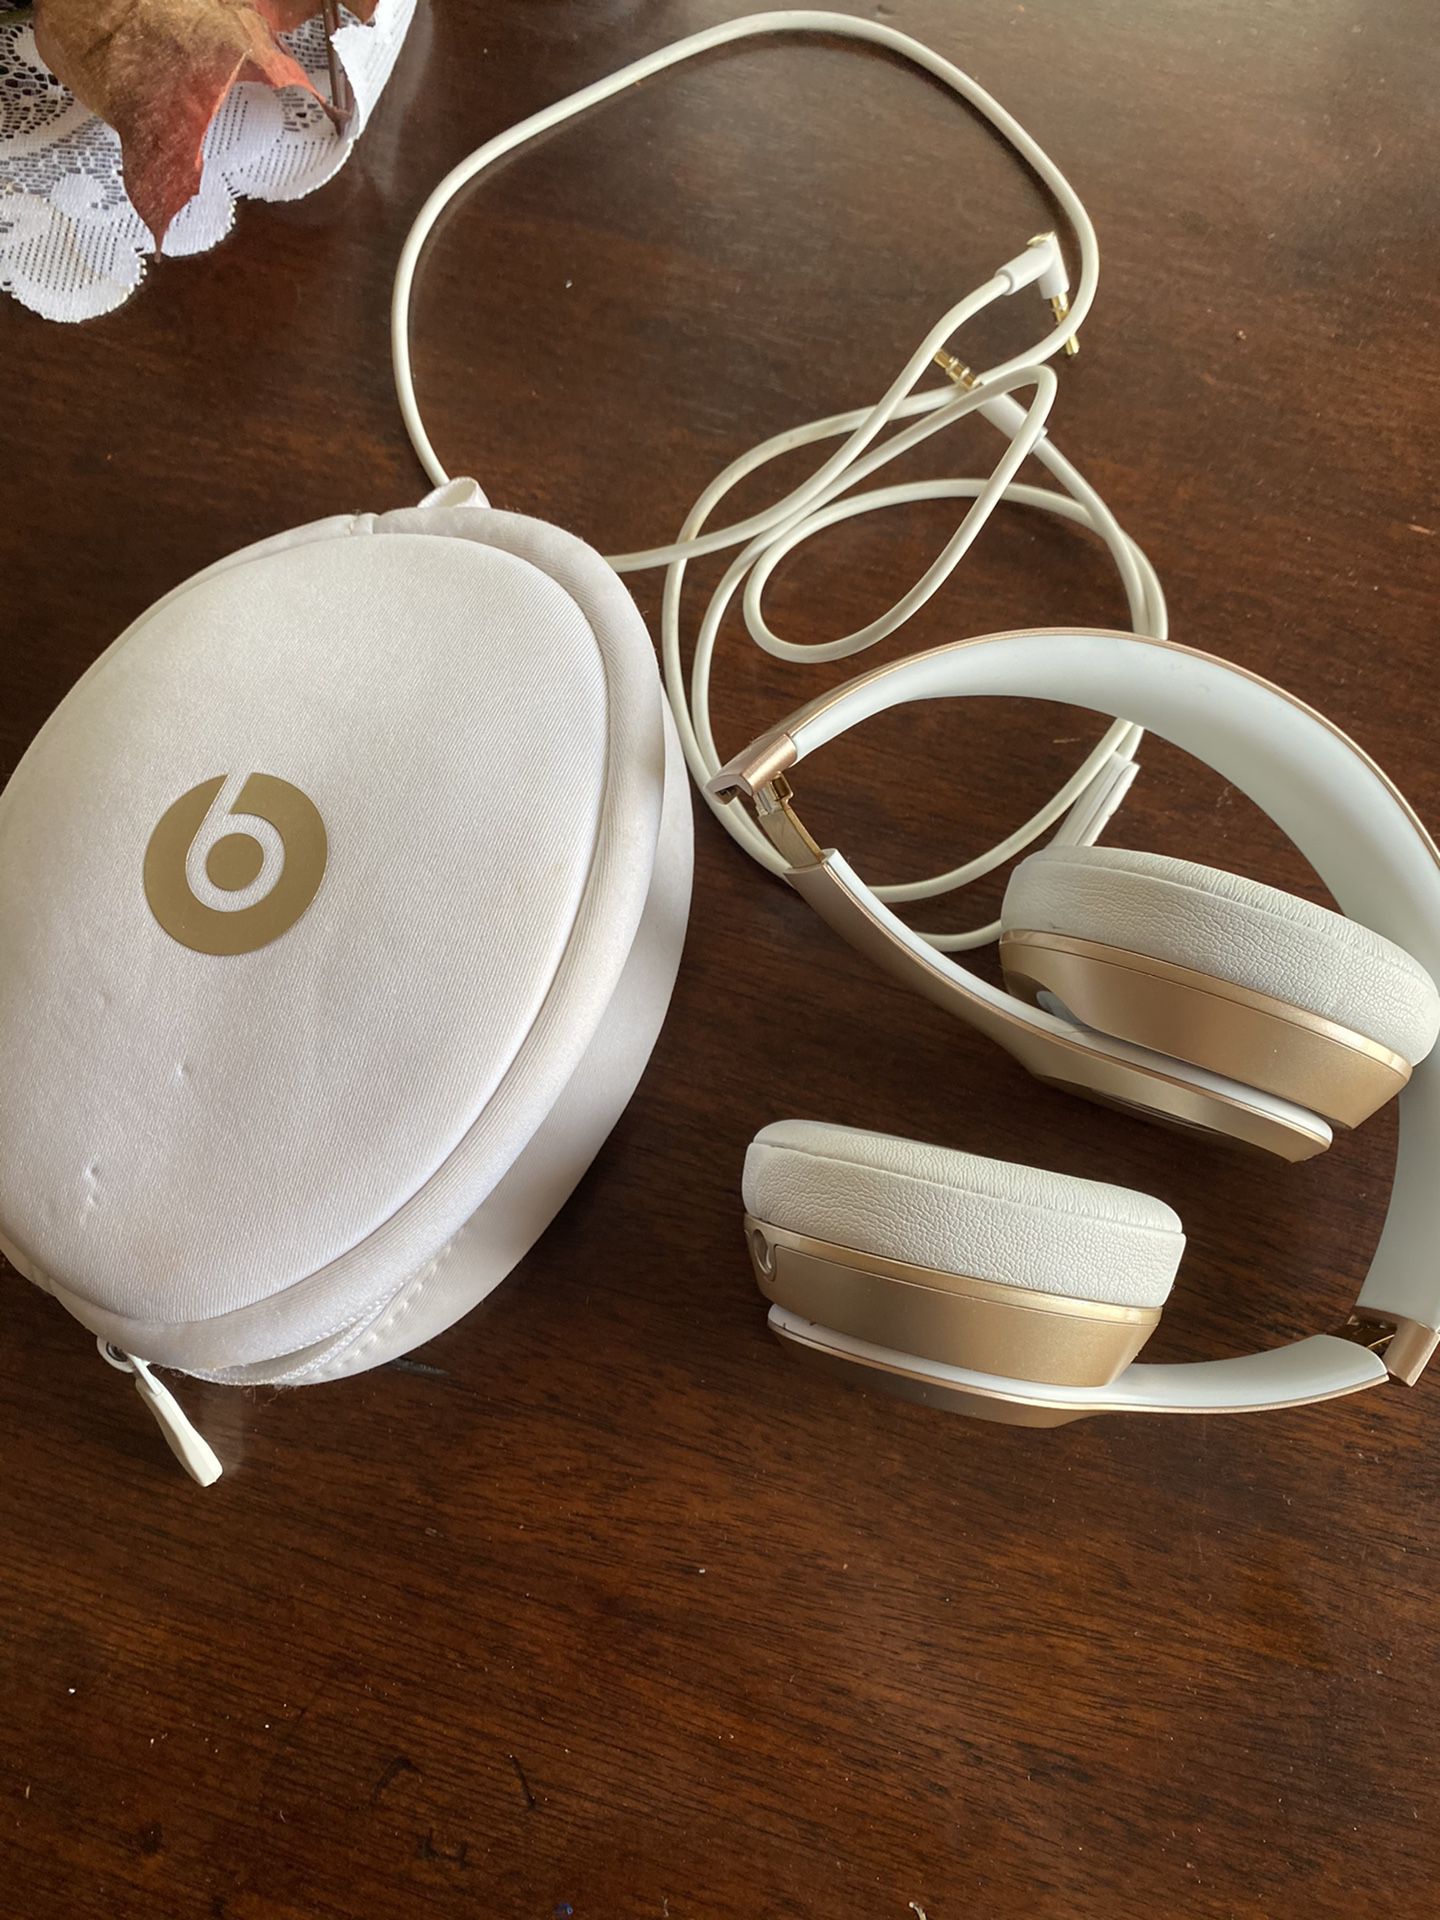 Gold Beats Solo wireless headphones